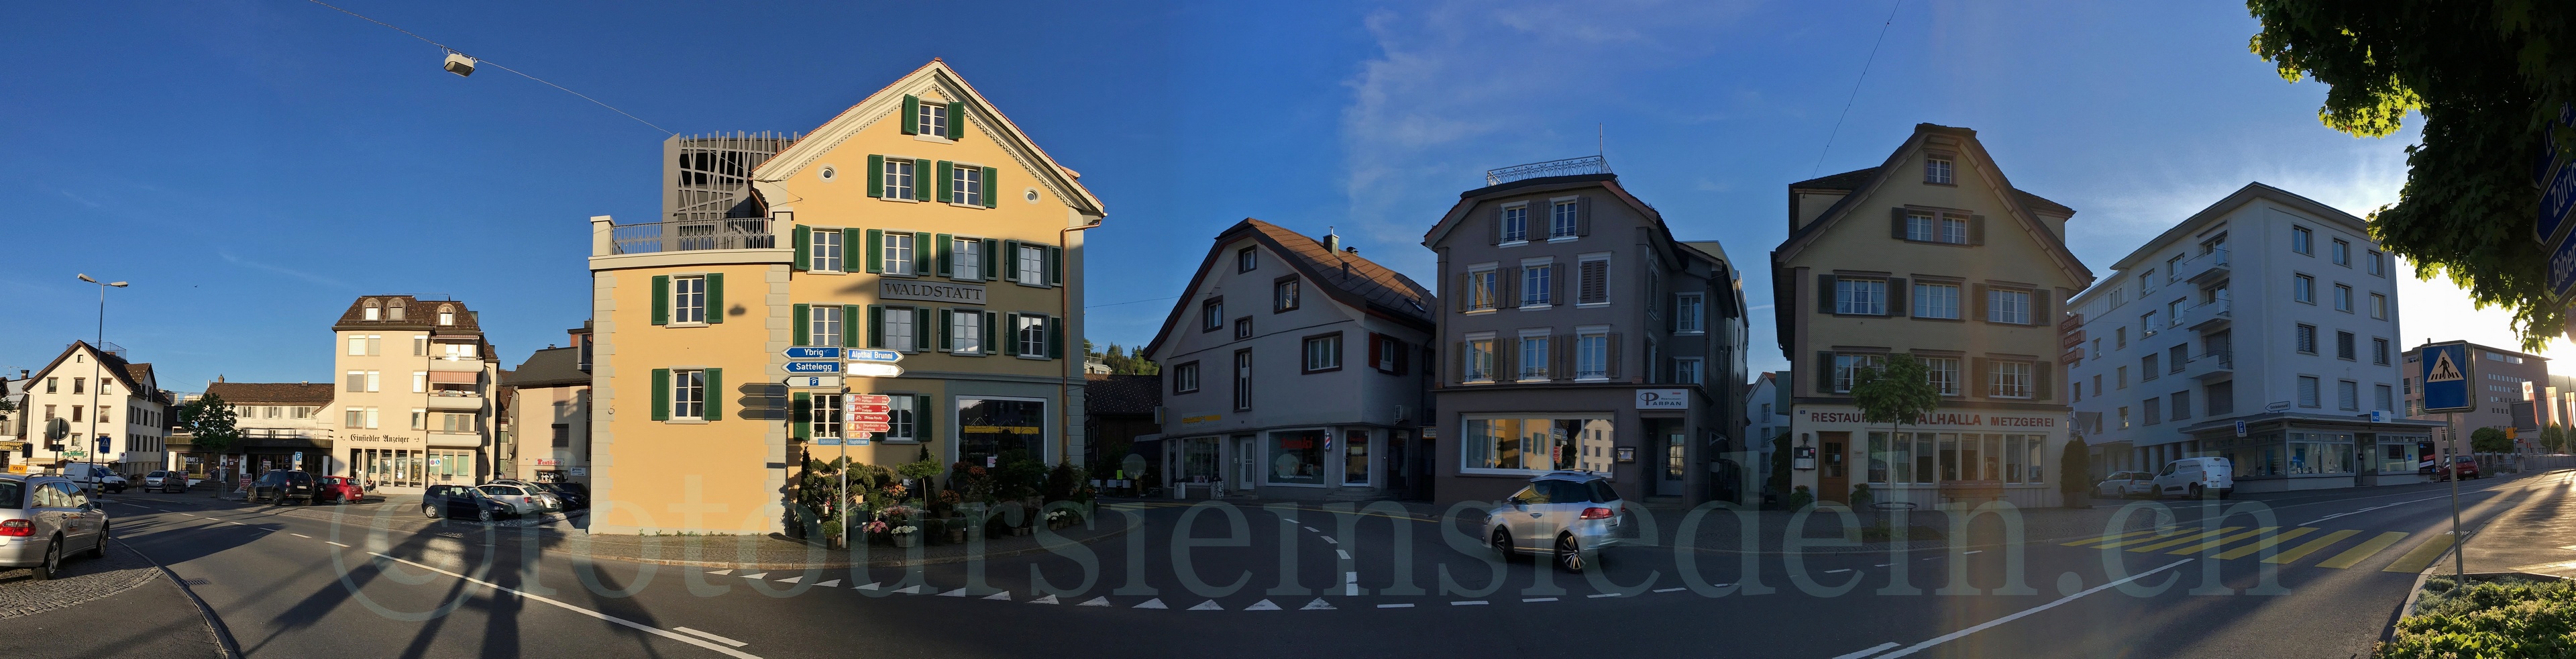 Panorama Einsiedeln 2020 163